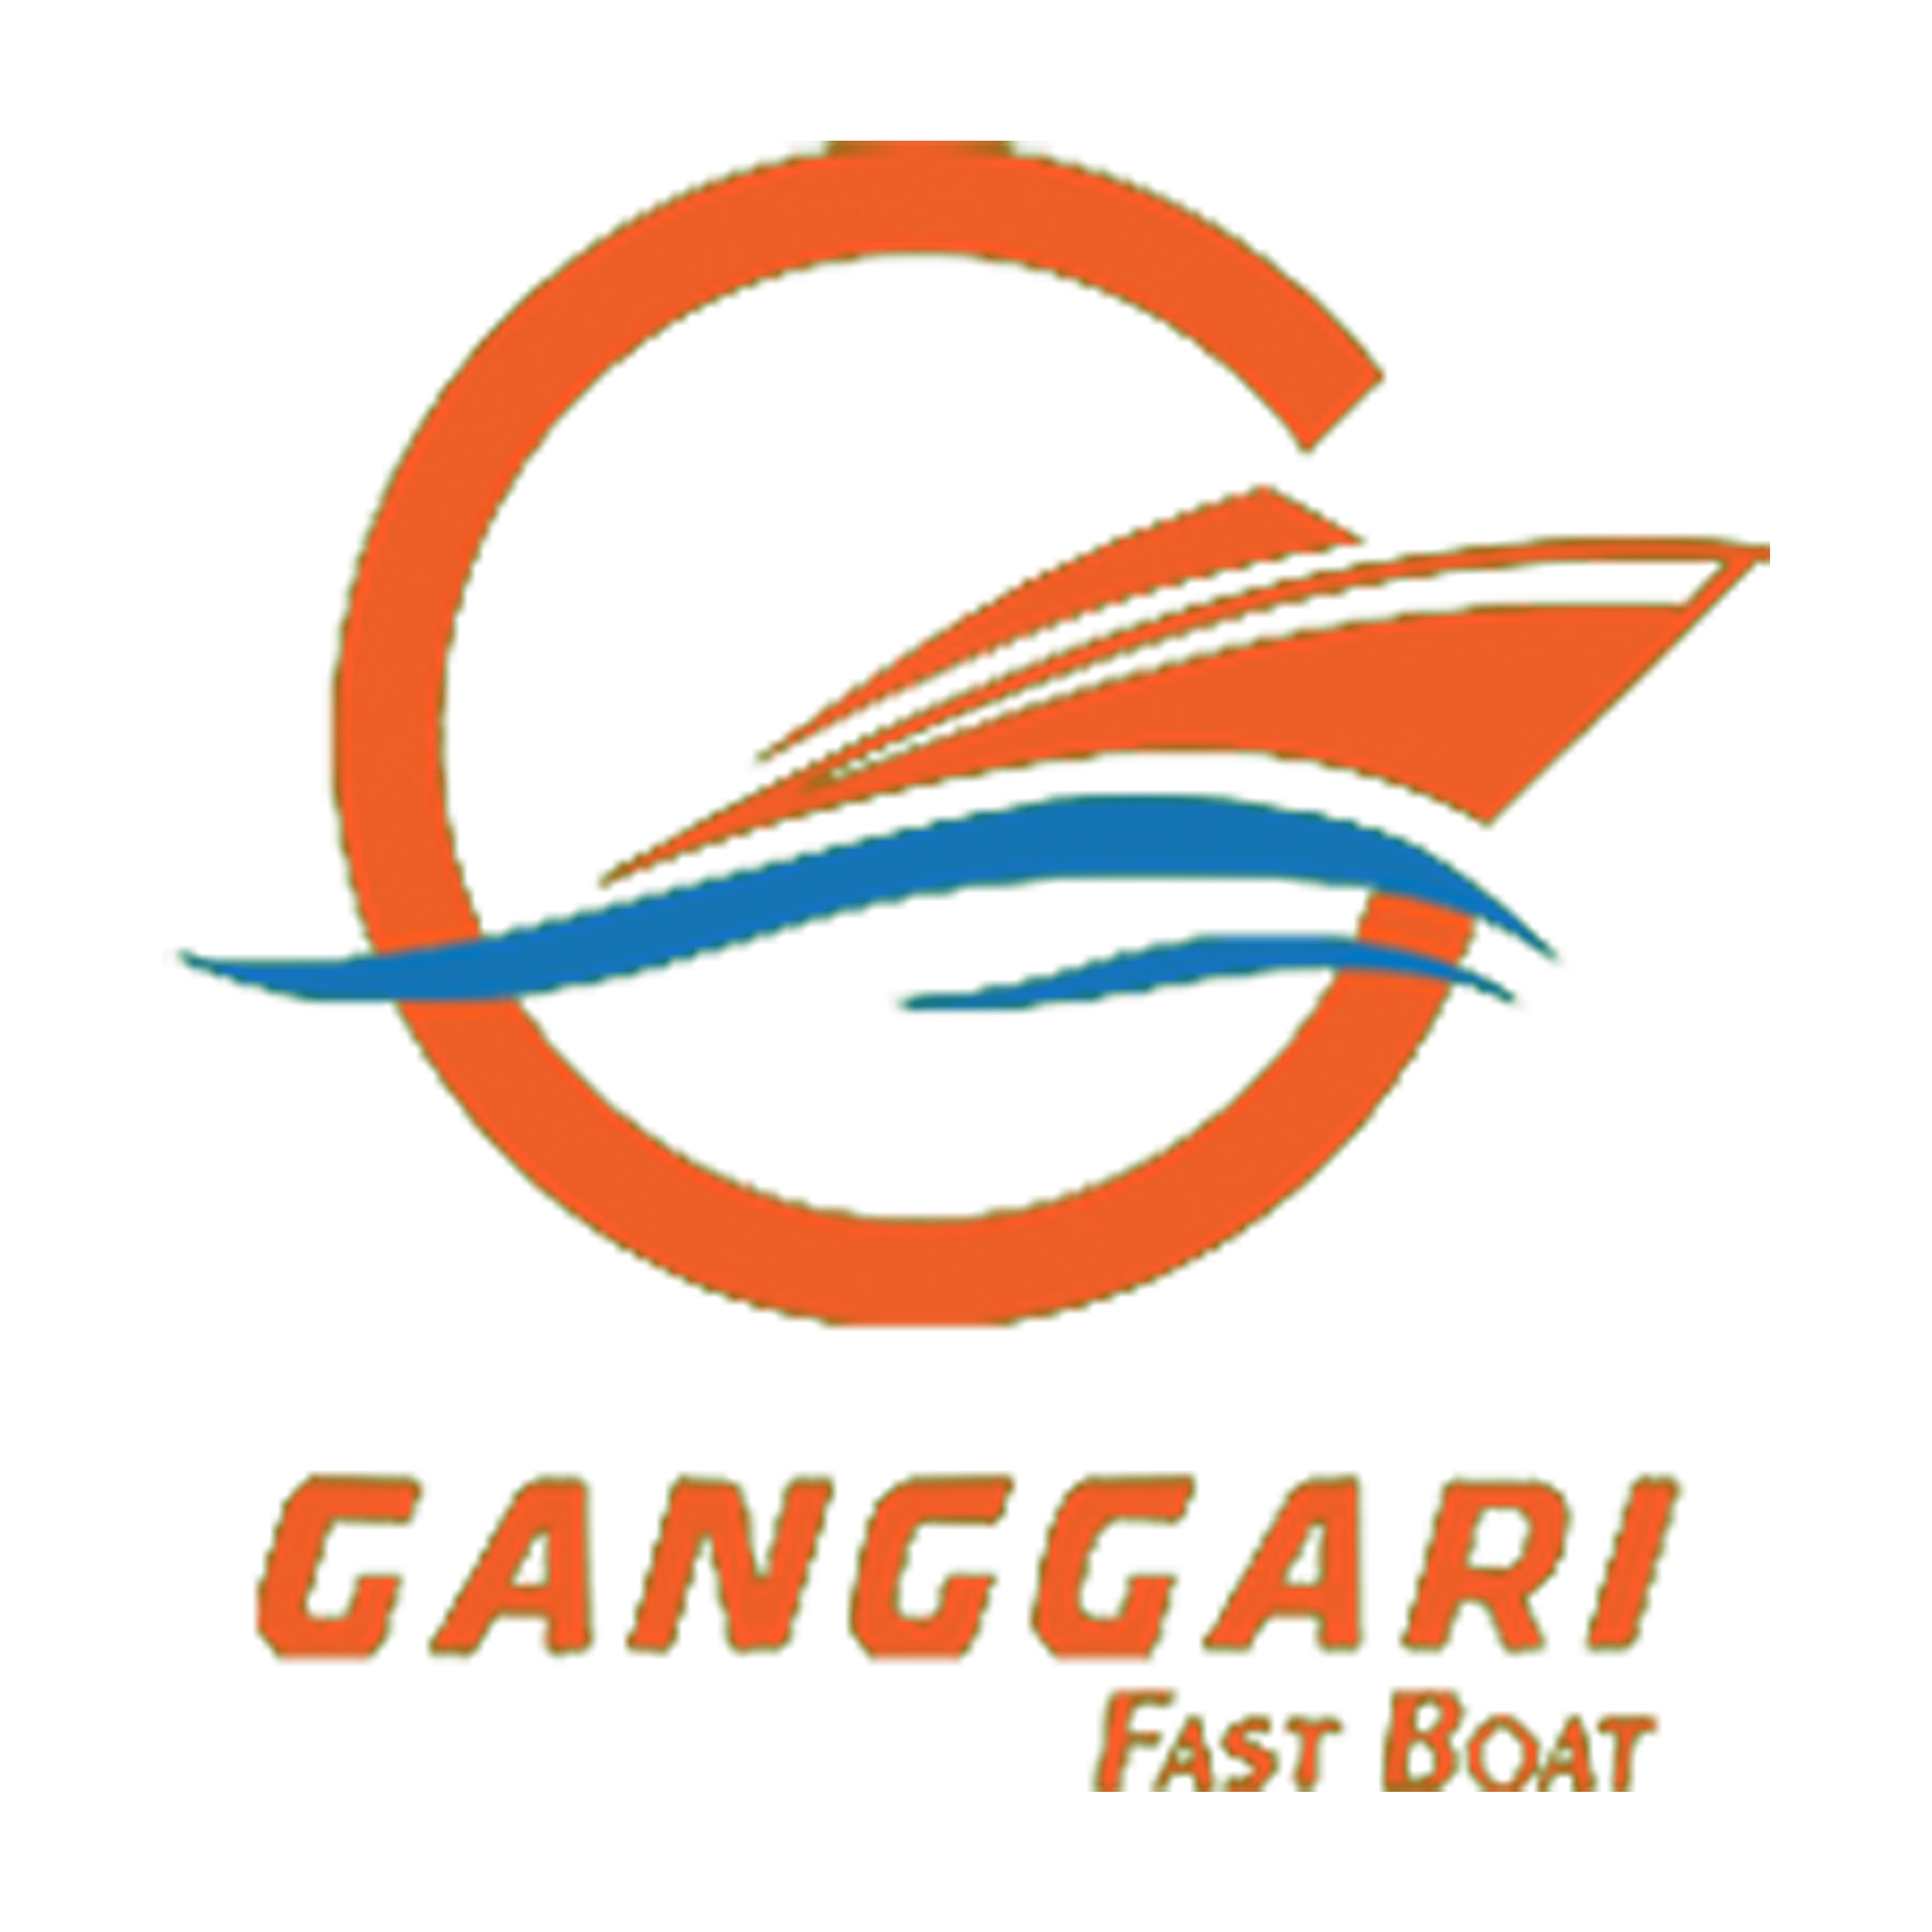 Ganggari Fast Boat to Gili Trawangan  (Gili Trawangan)  